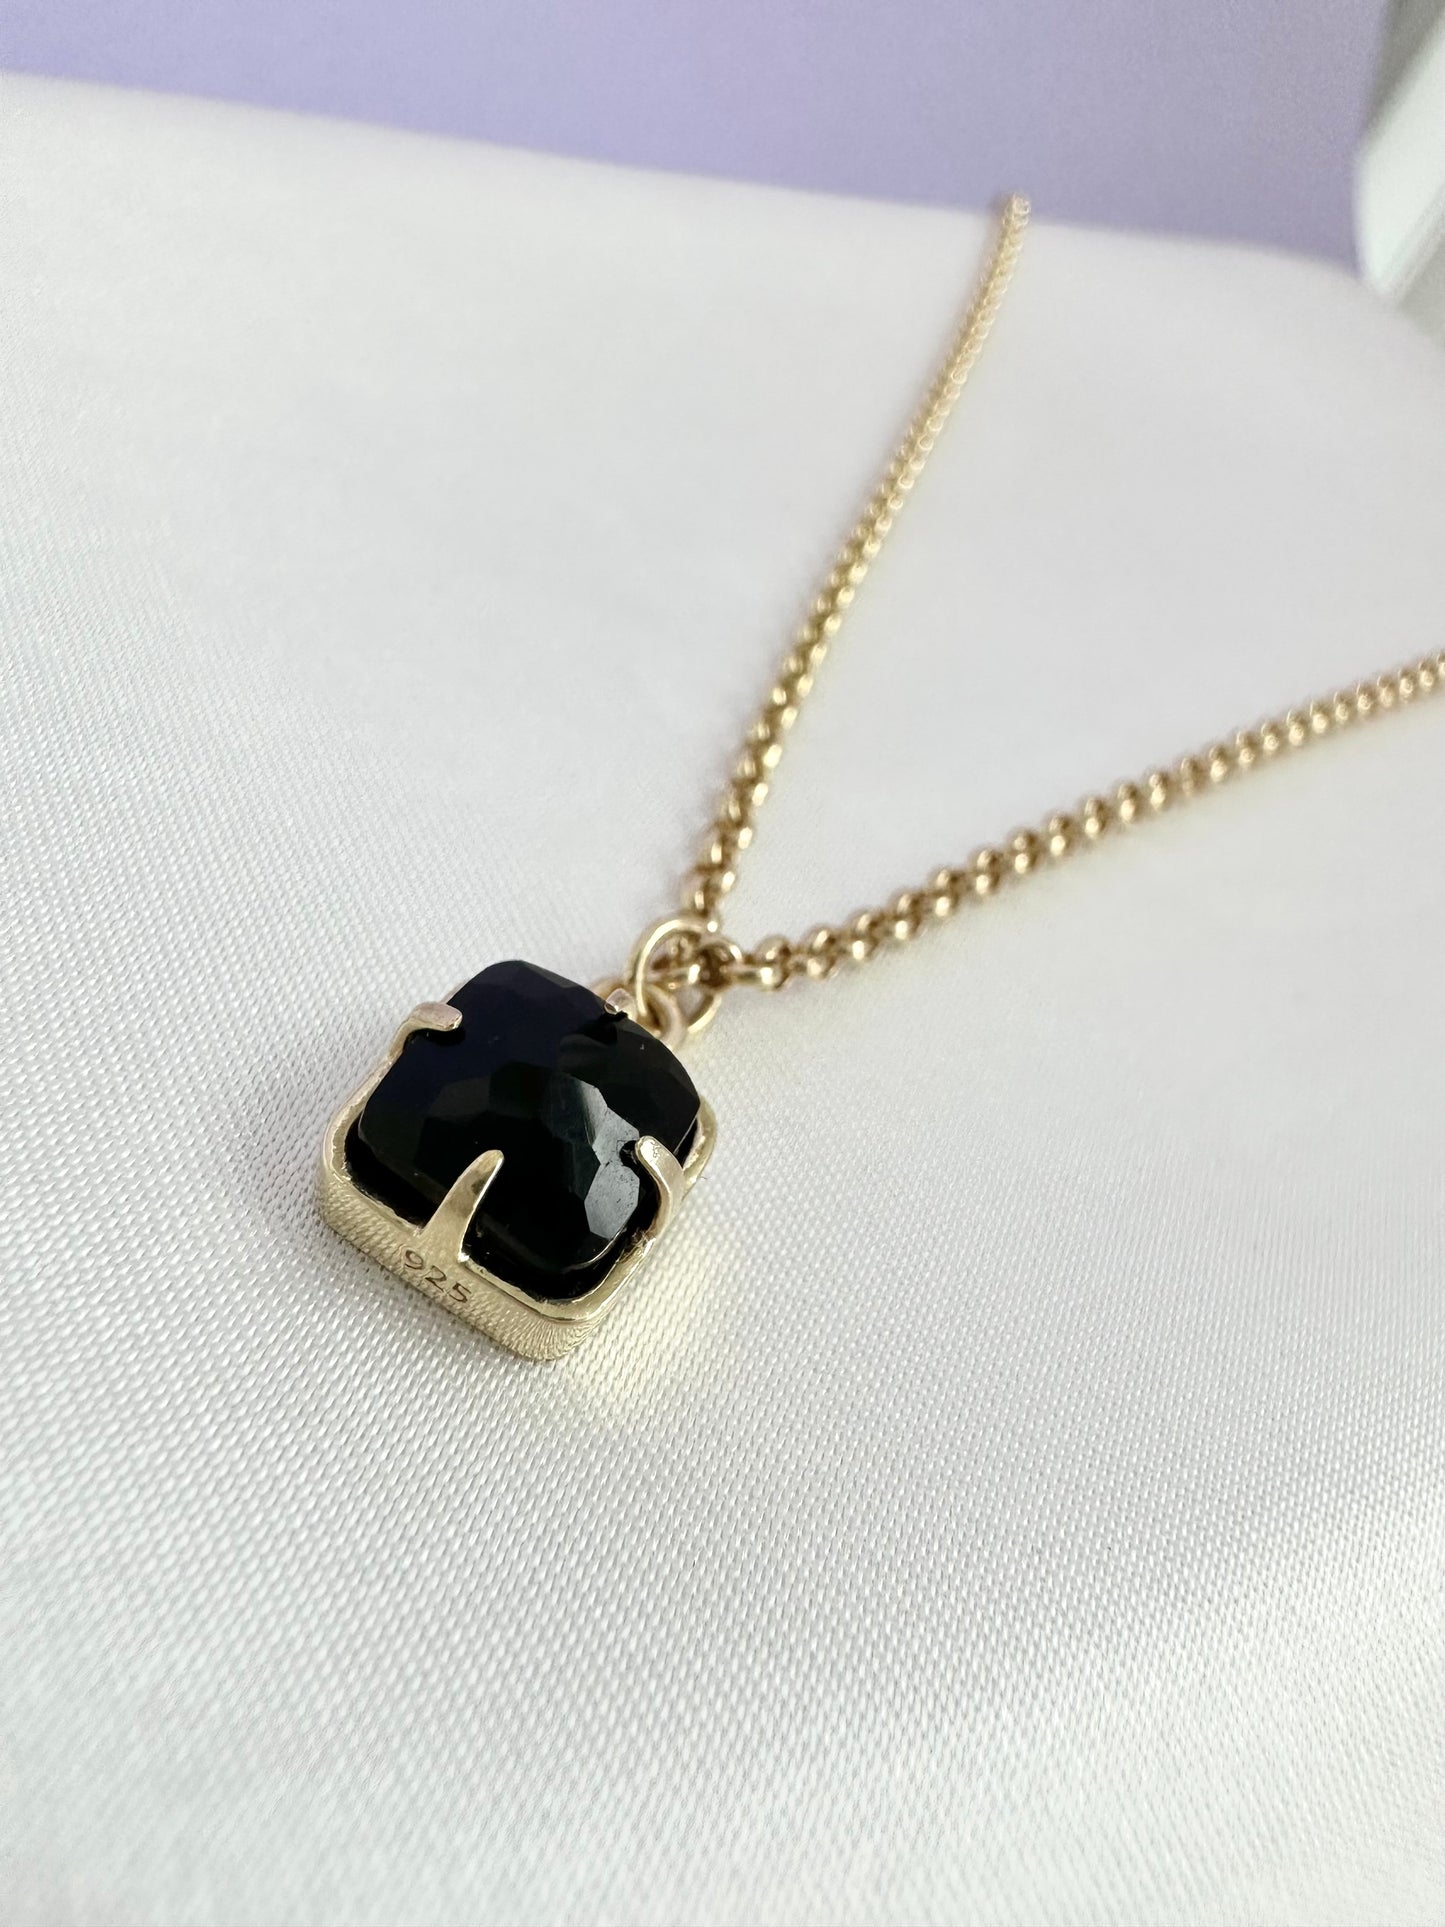 Necklace with Black Onyx stone